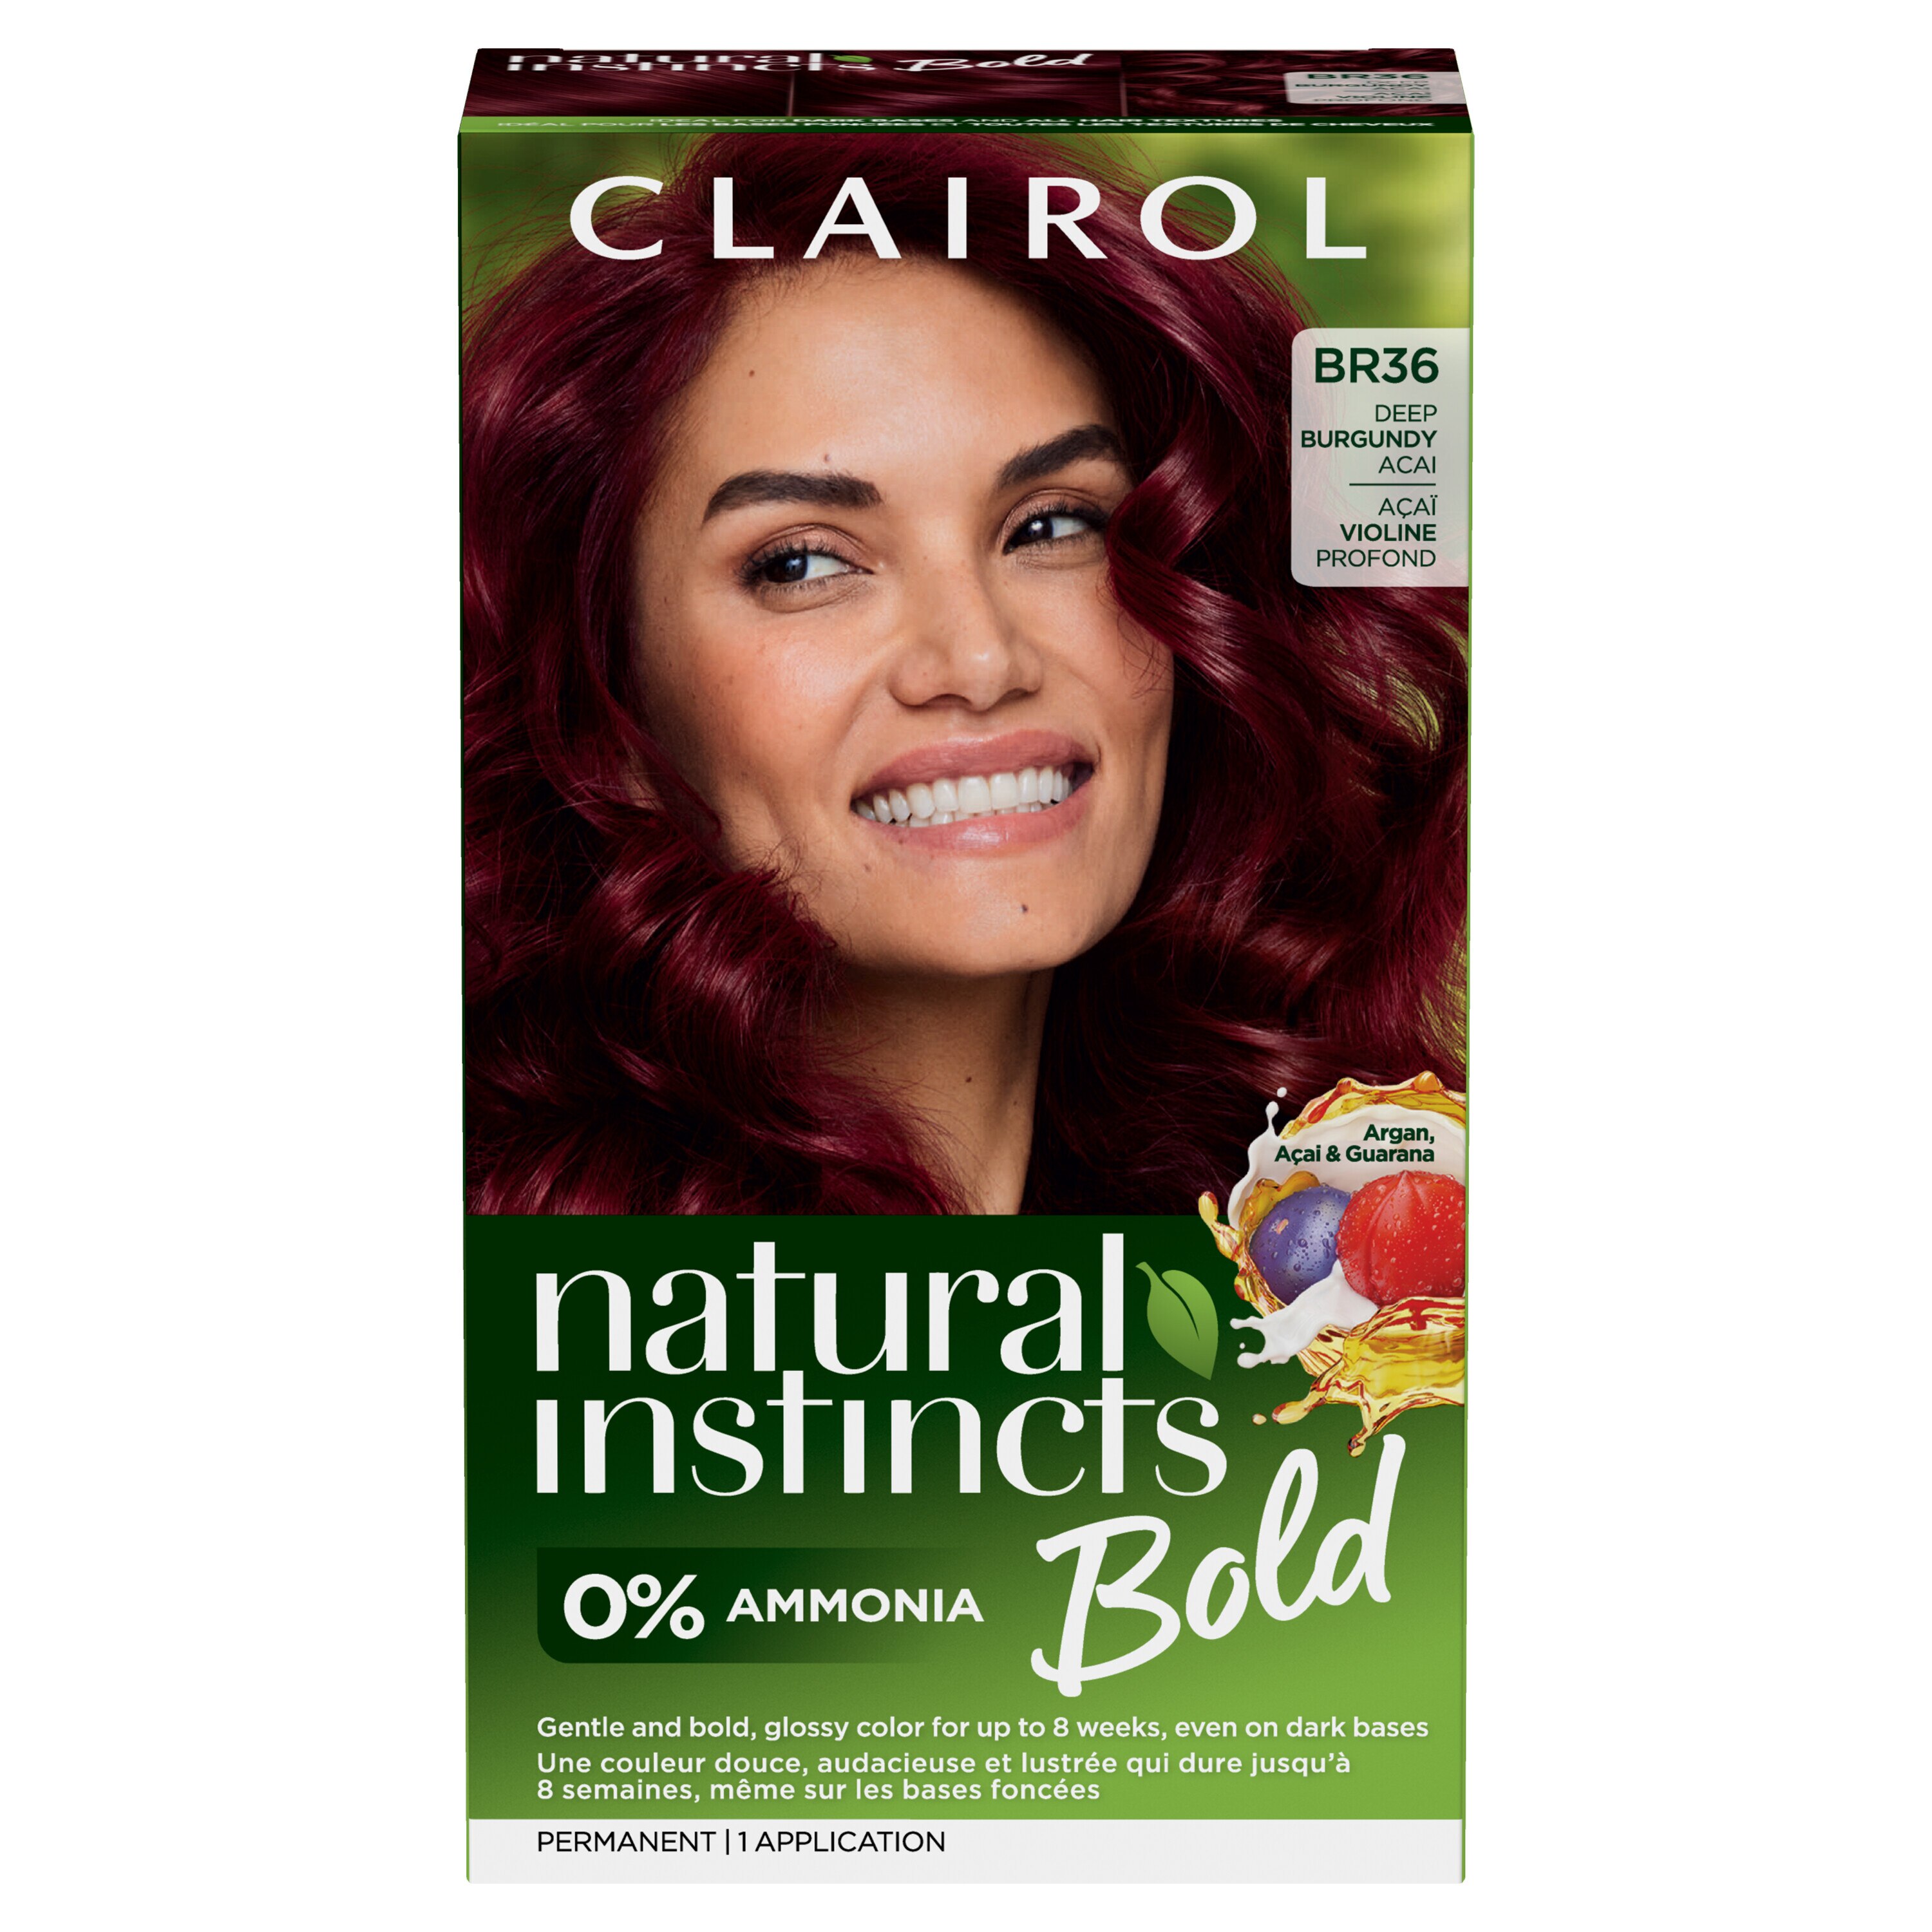 Clairol Natural Instincts Bold Permanent Hair Color, BR36 Deep Burgundy Acai , CVS